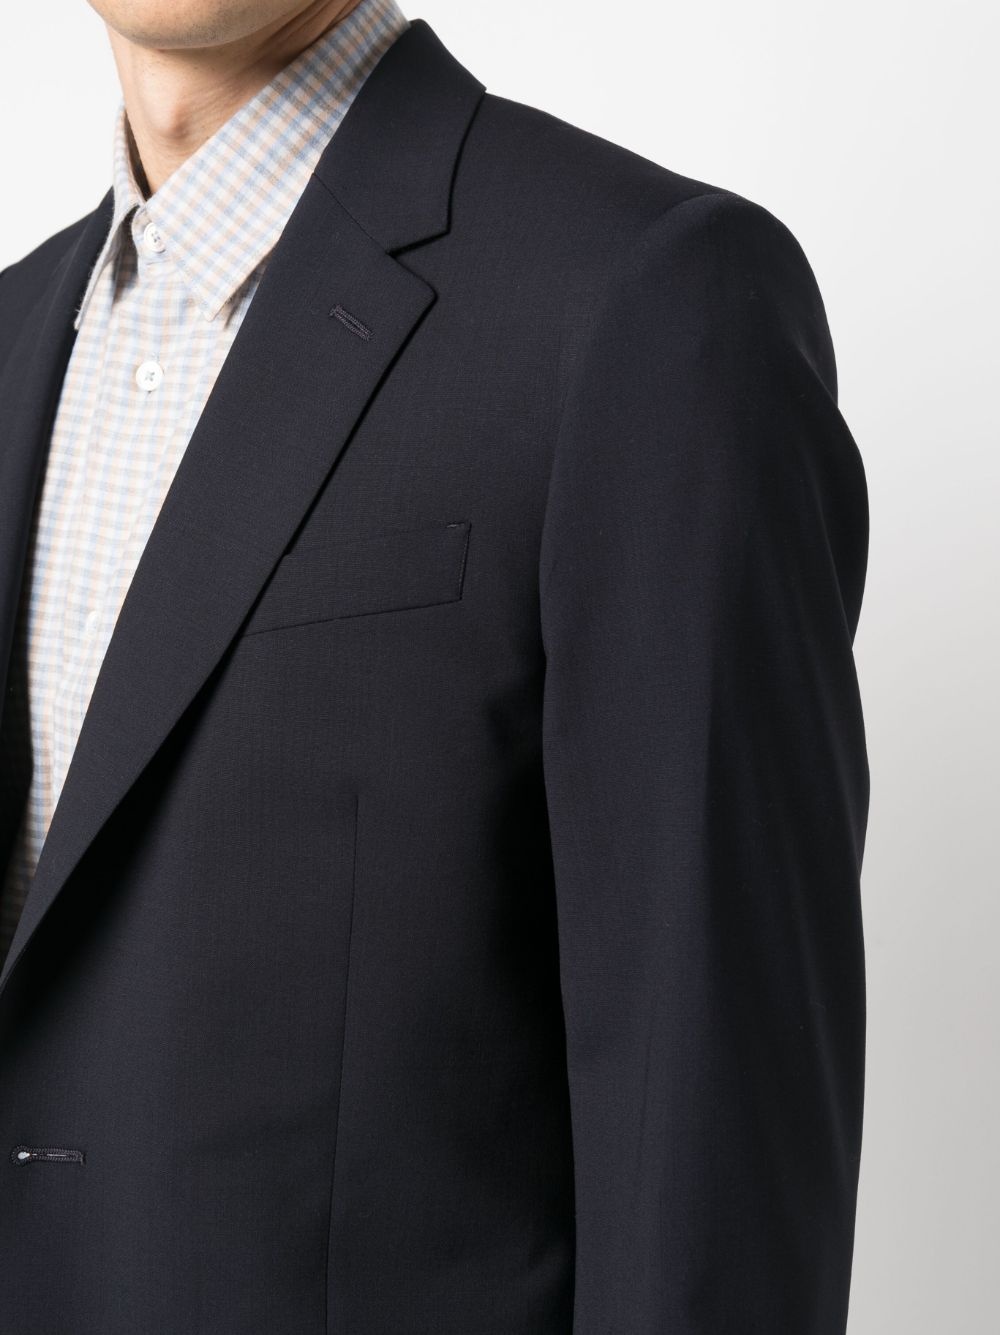 Mens Tailored Fit 2 Button Suit - 5